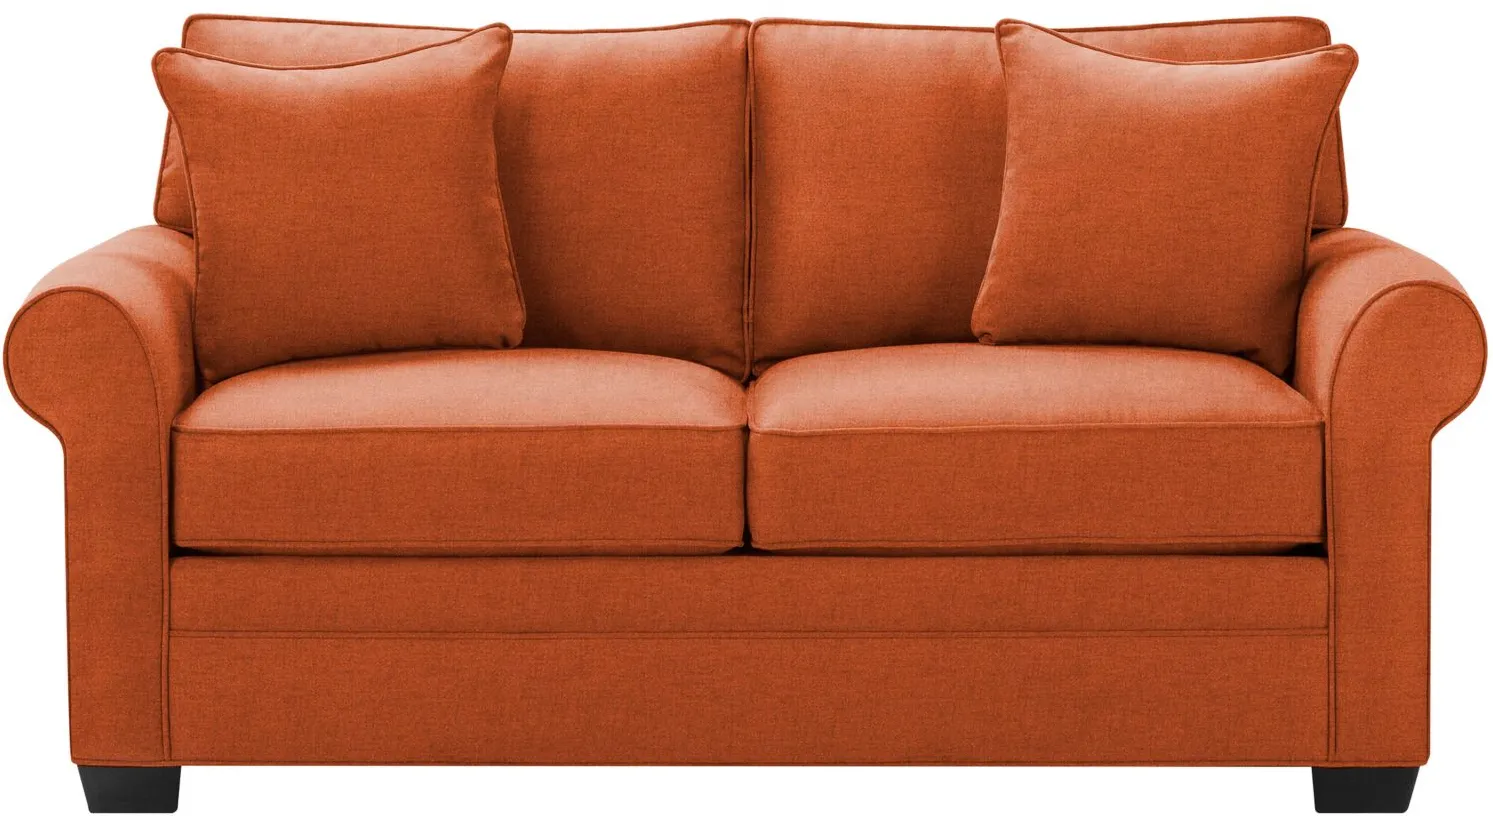 Glendora Full Sleeper Sofa in Santa Rosa Adobe by H.M. Richards